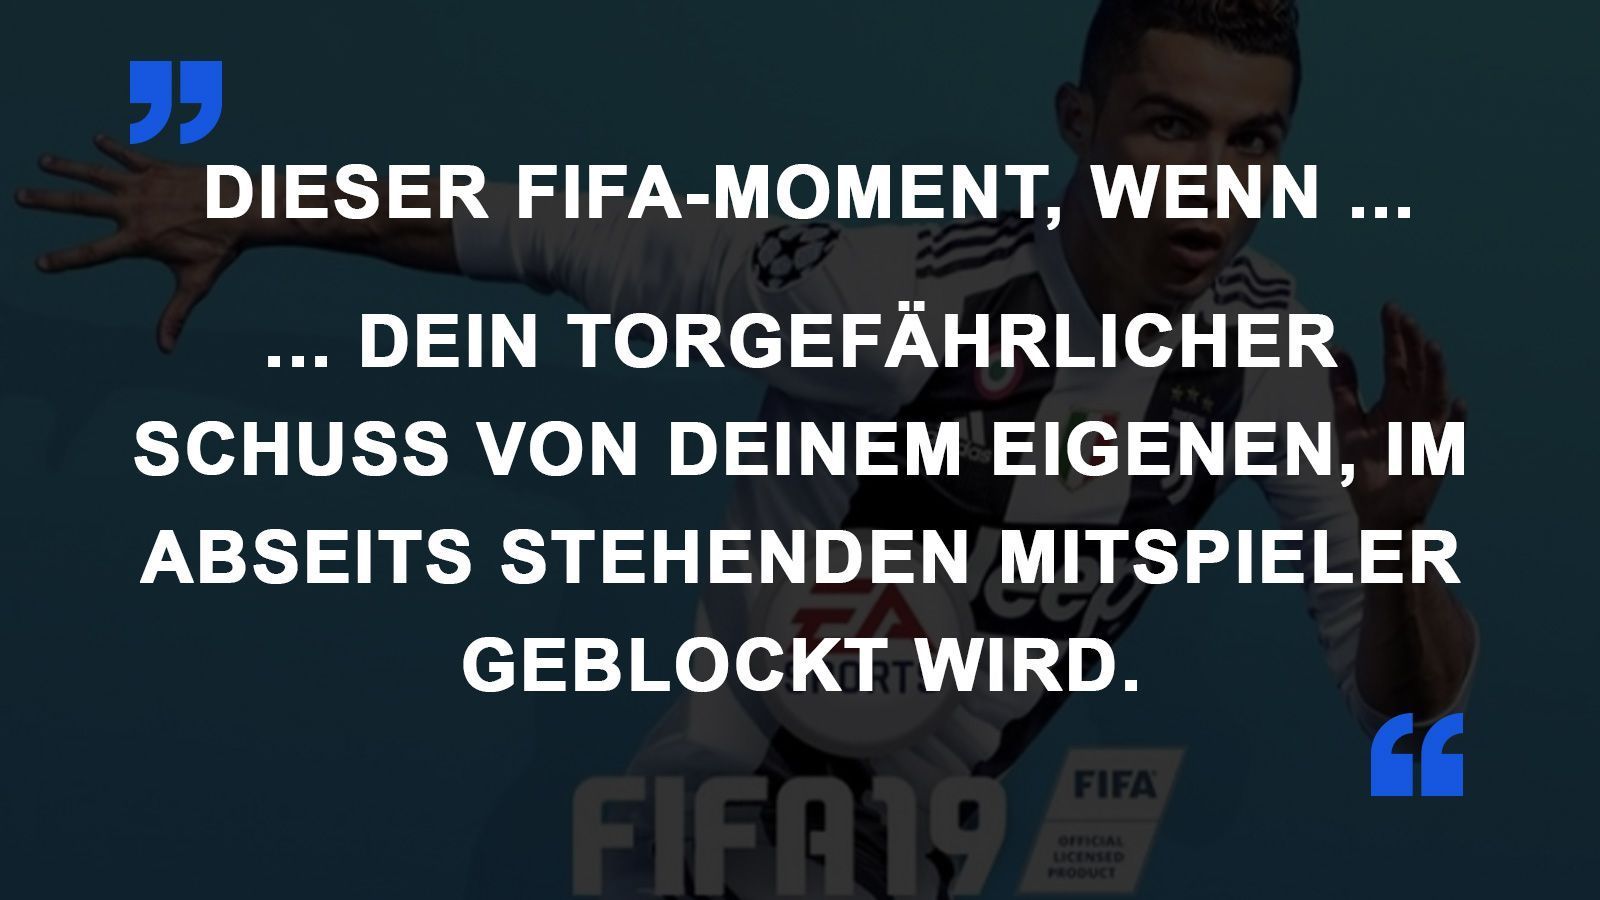 
                <strong>FIFA Momente Mitspieler blockt</strong><br>
                
              